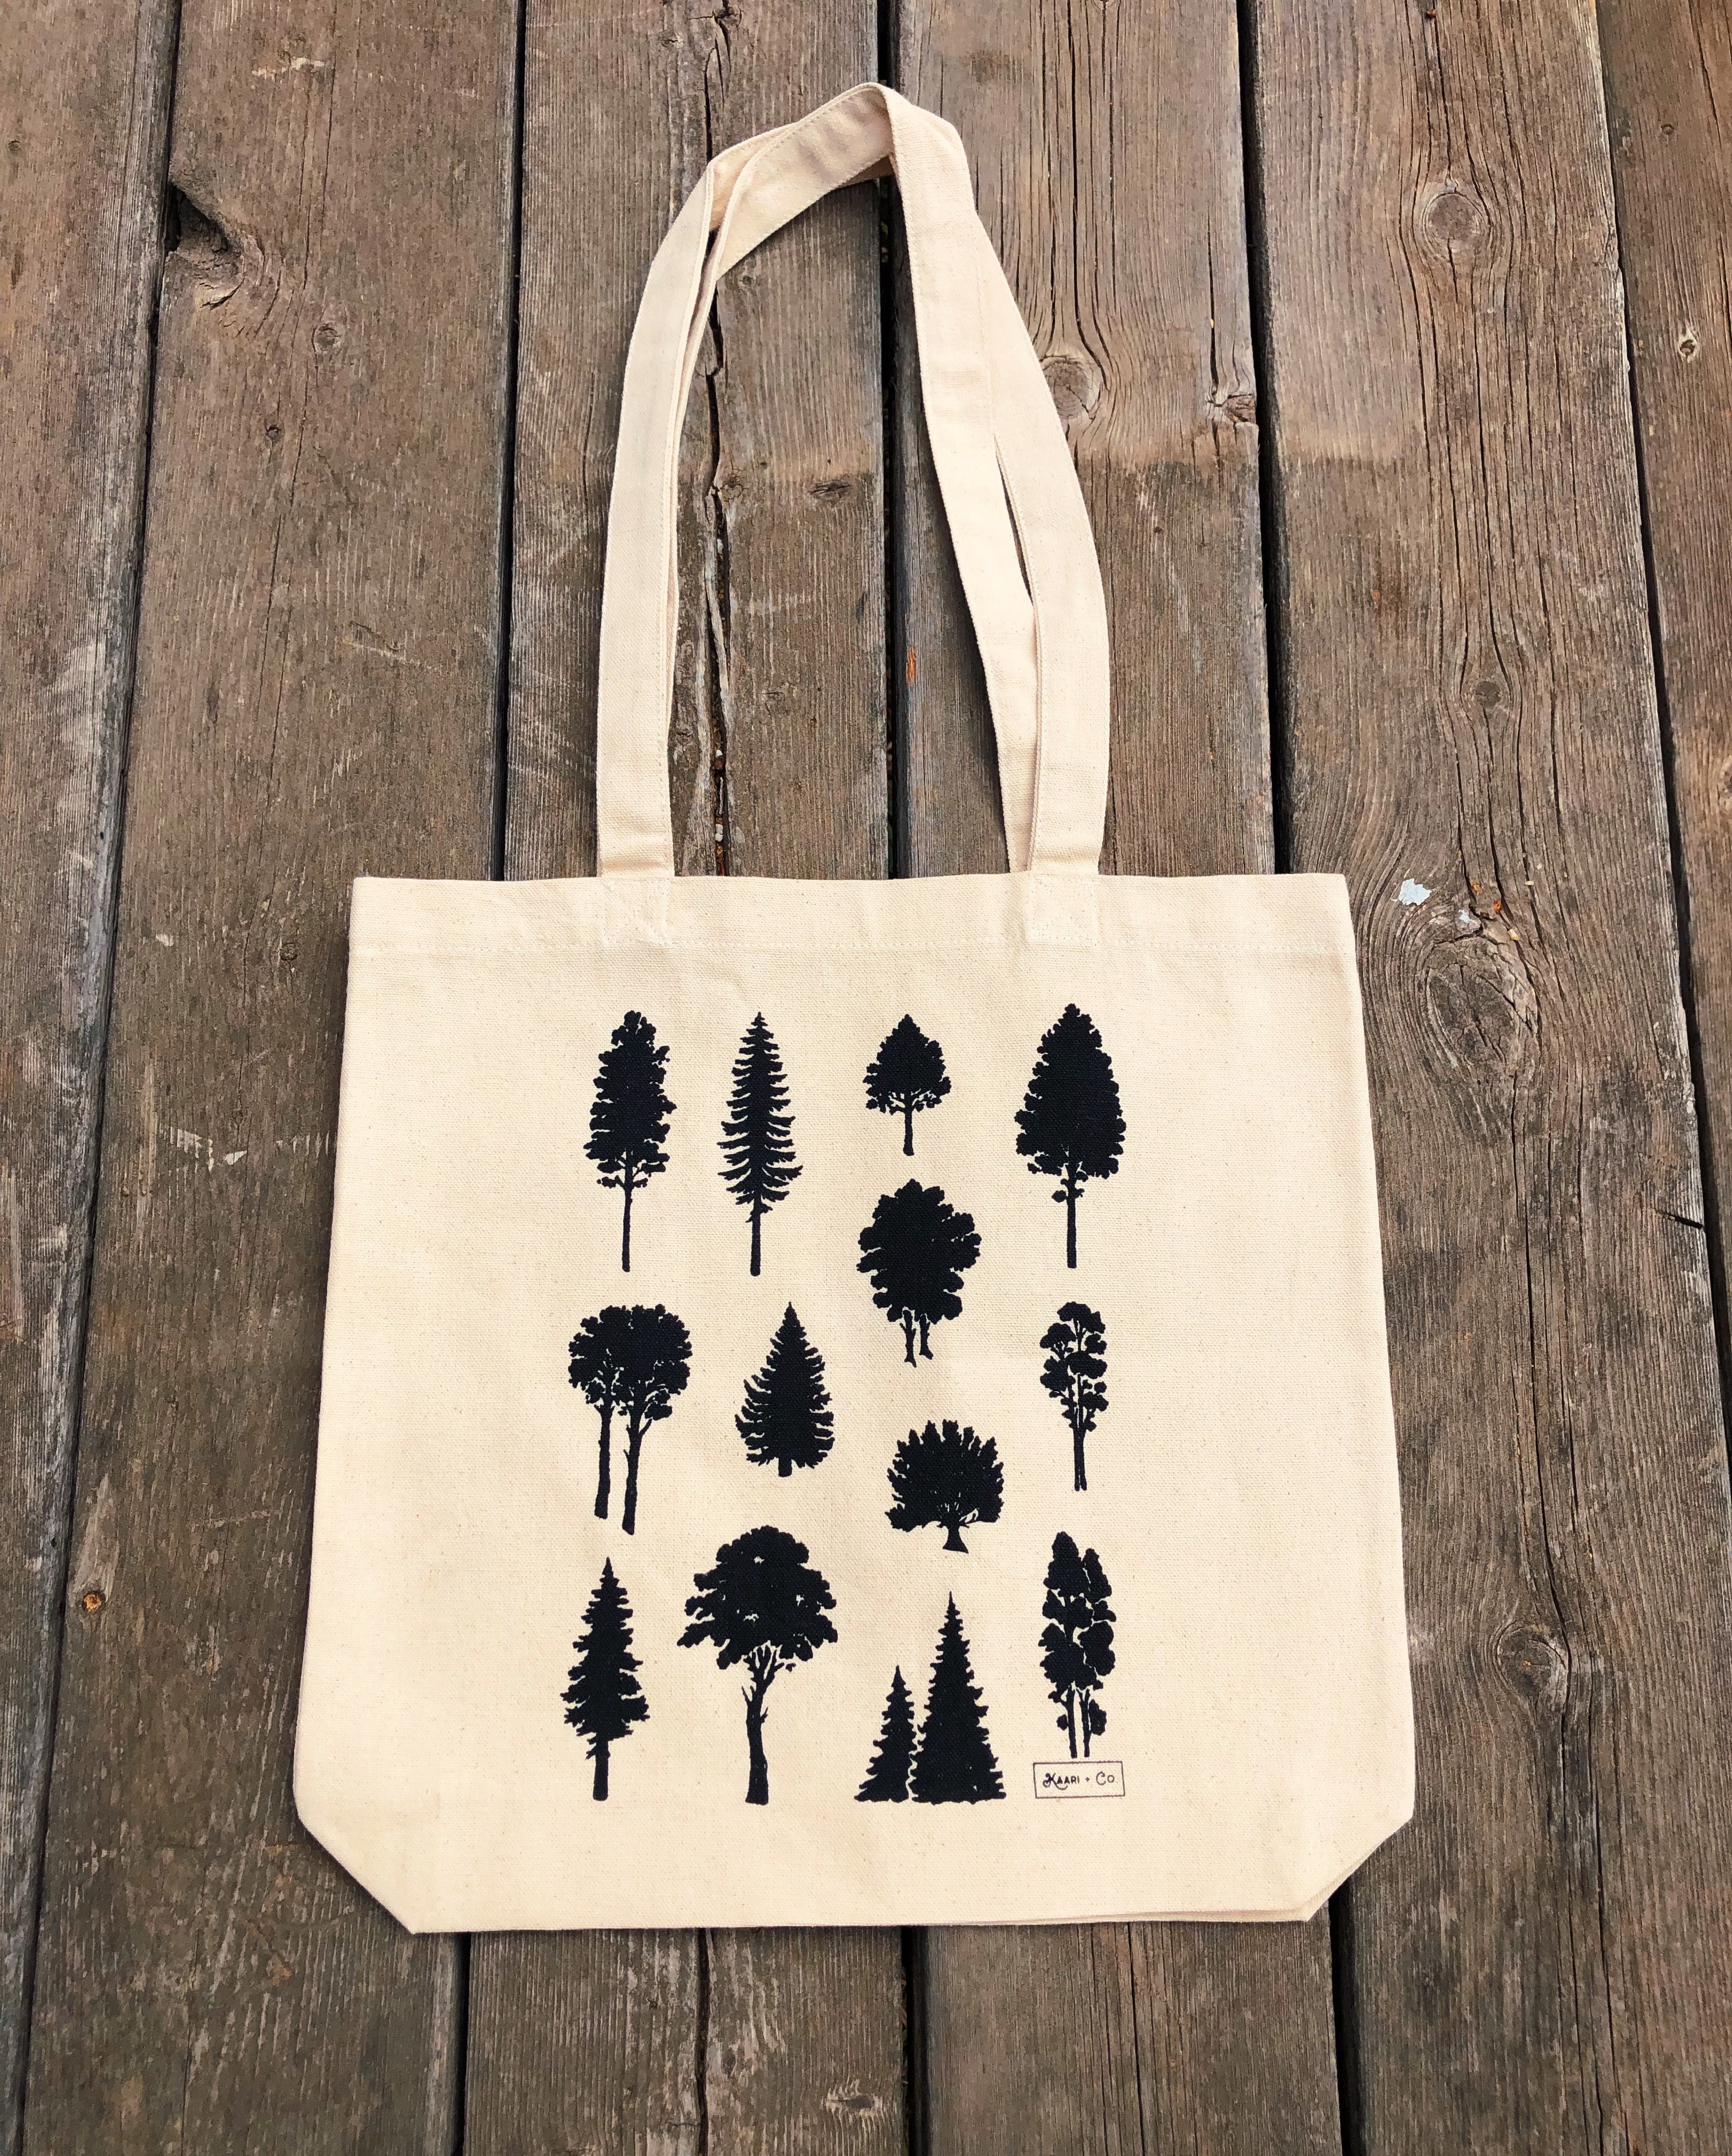 Tree of Life Shoulder Canvas Bag (54850) – Naturally Inspired Orlando